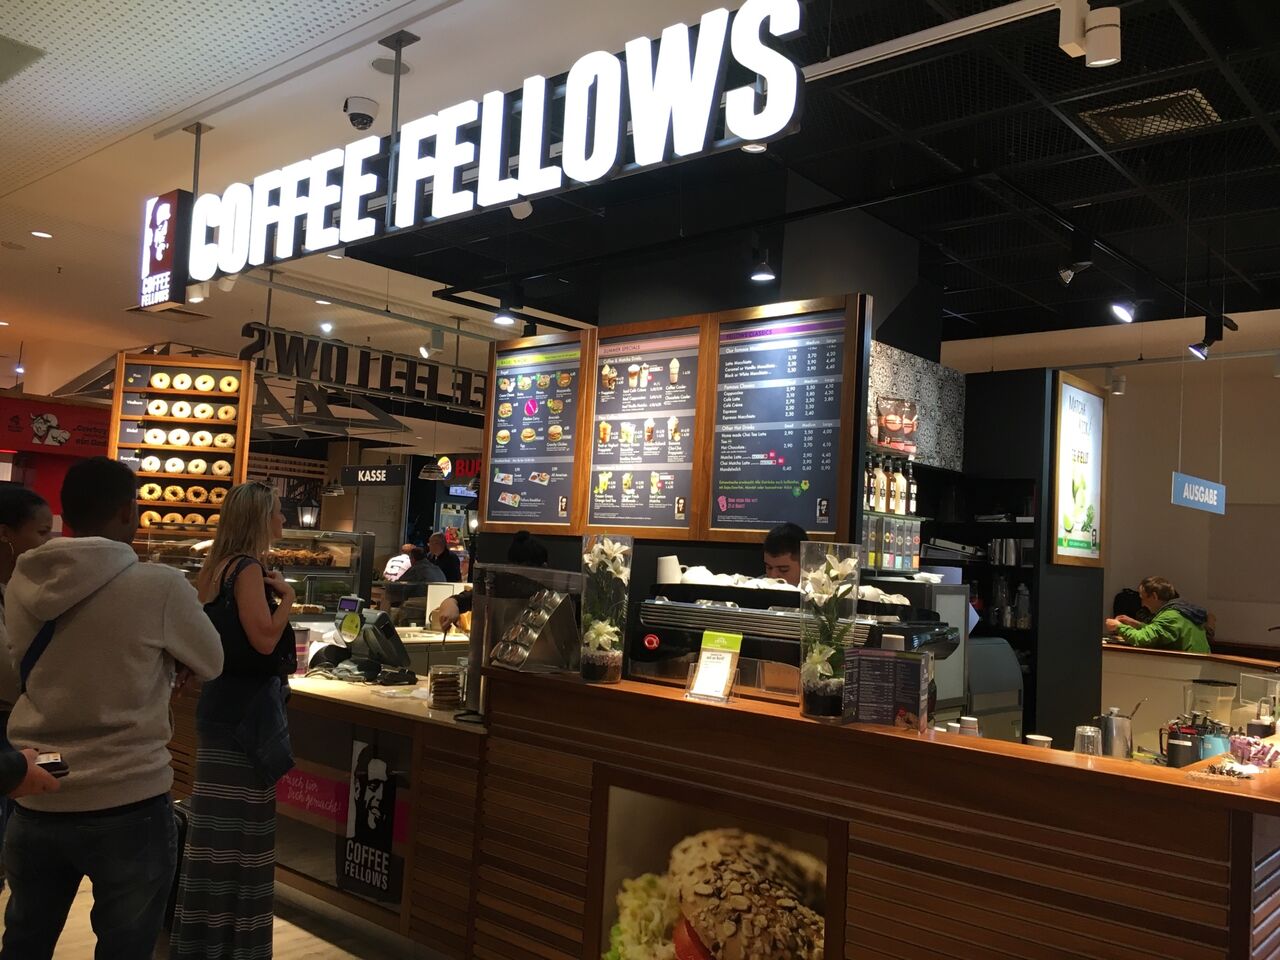 A photo of Coffee Fellows, Hbf